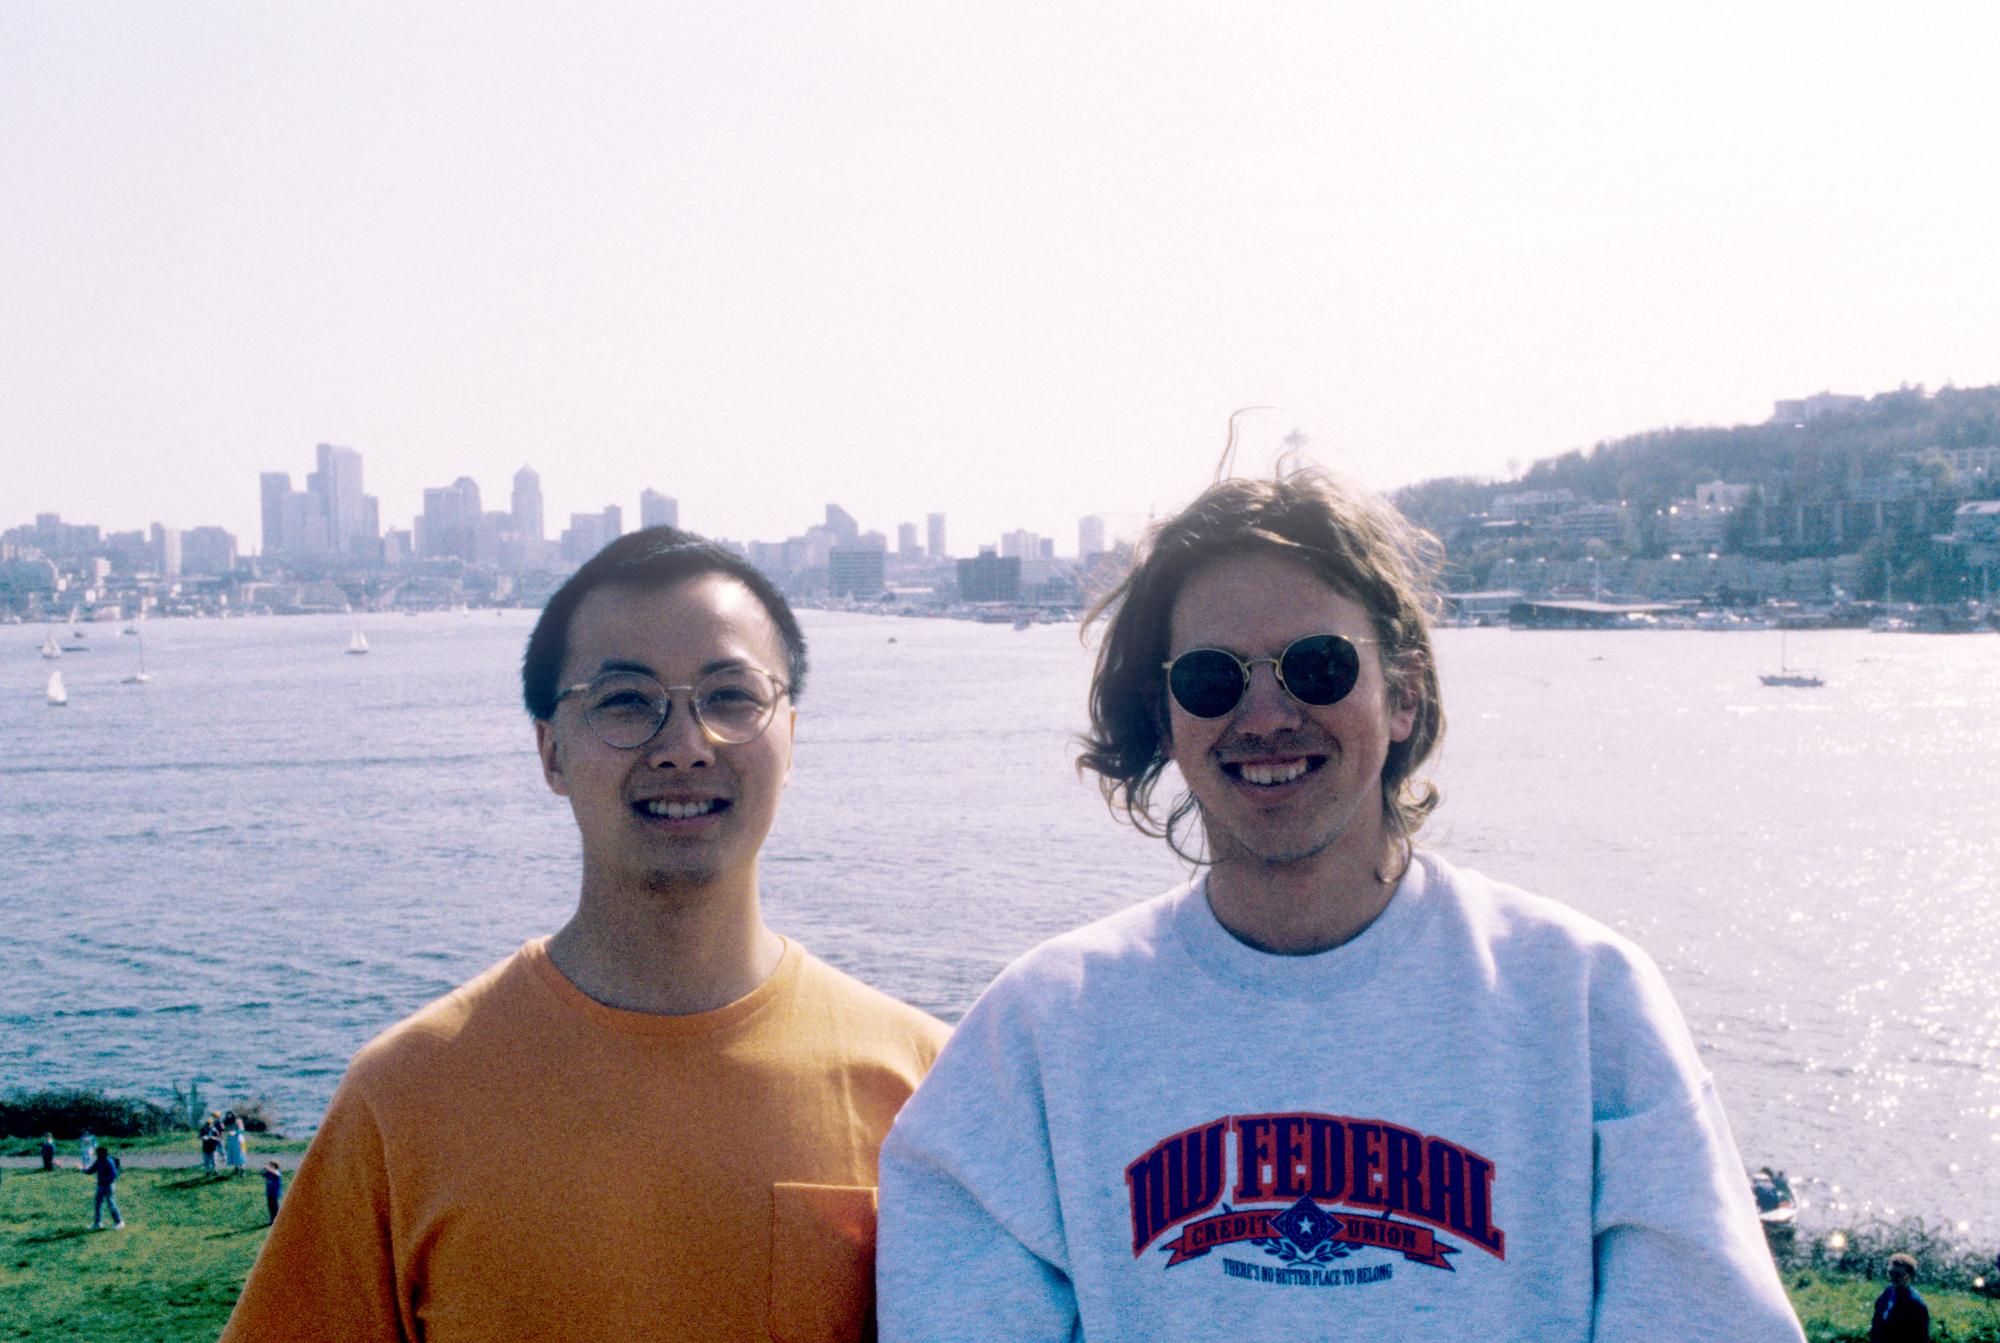 Seattle (1993) - David Austin